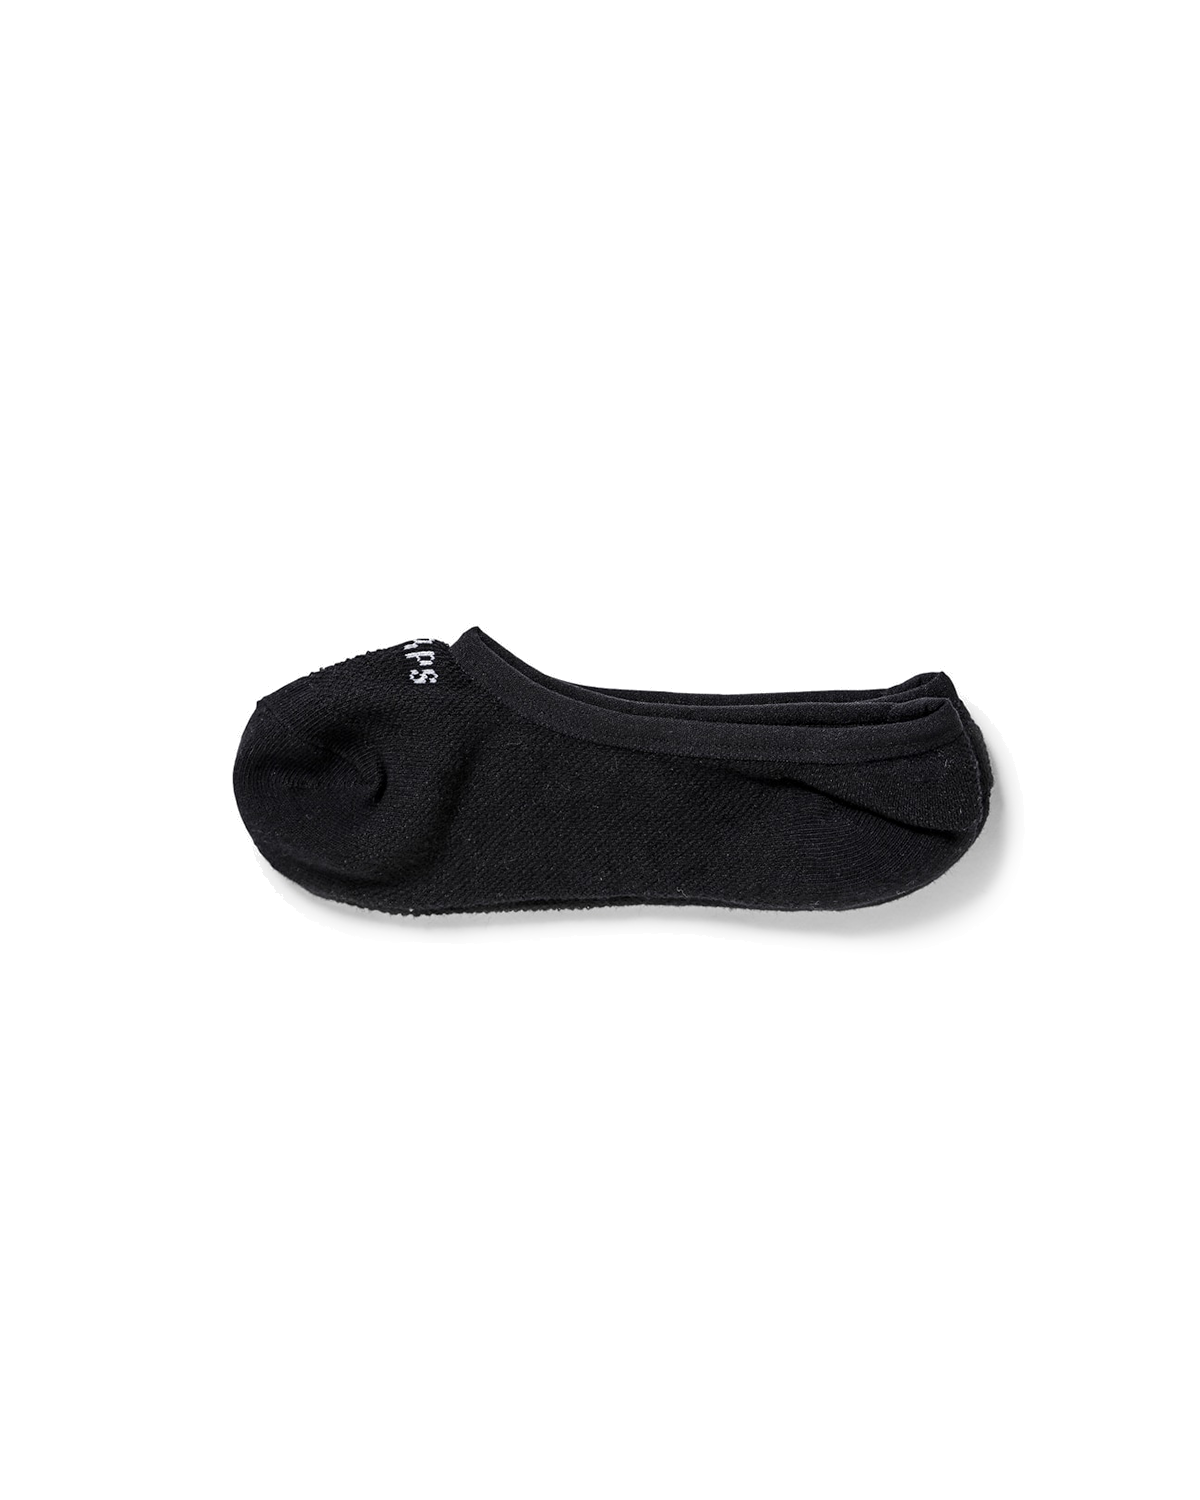 Skivvies No-Show Socks Black 3-Pack